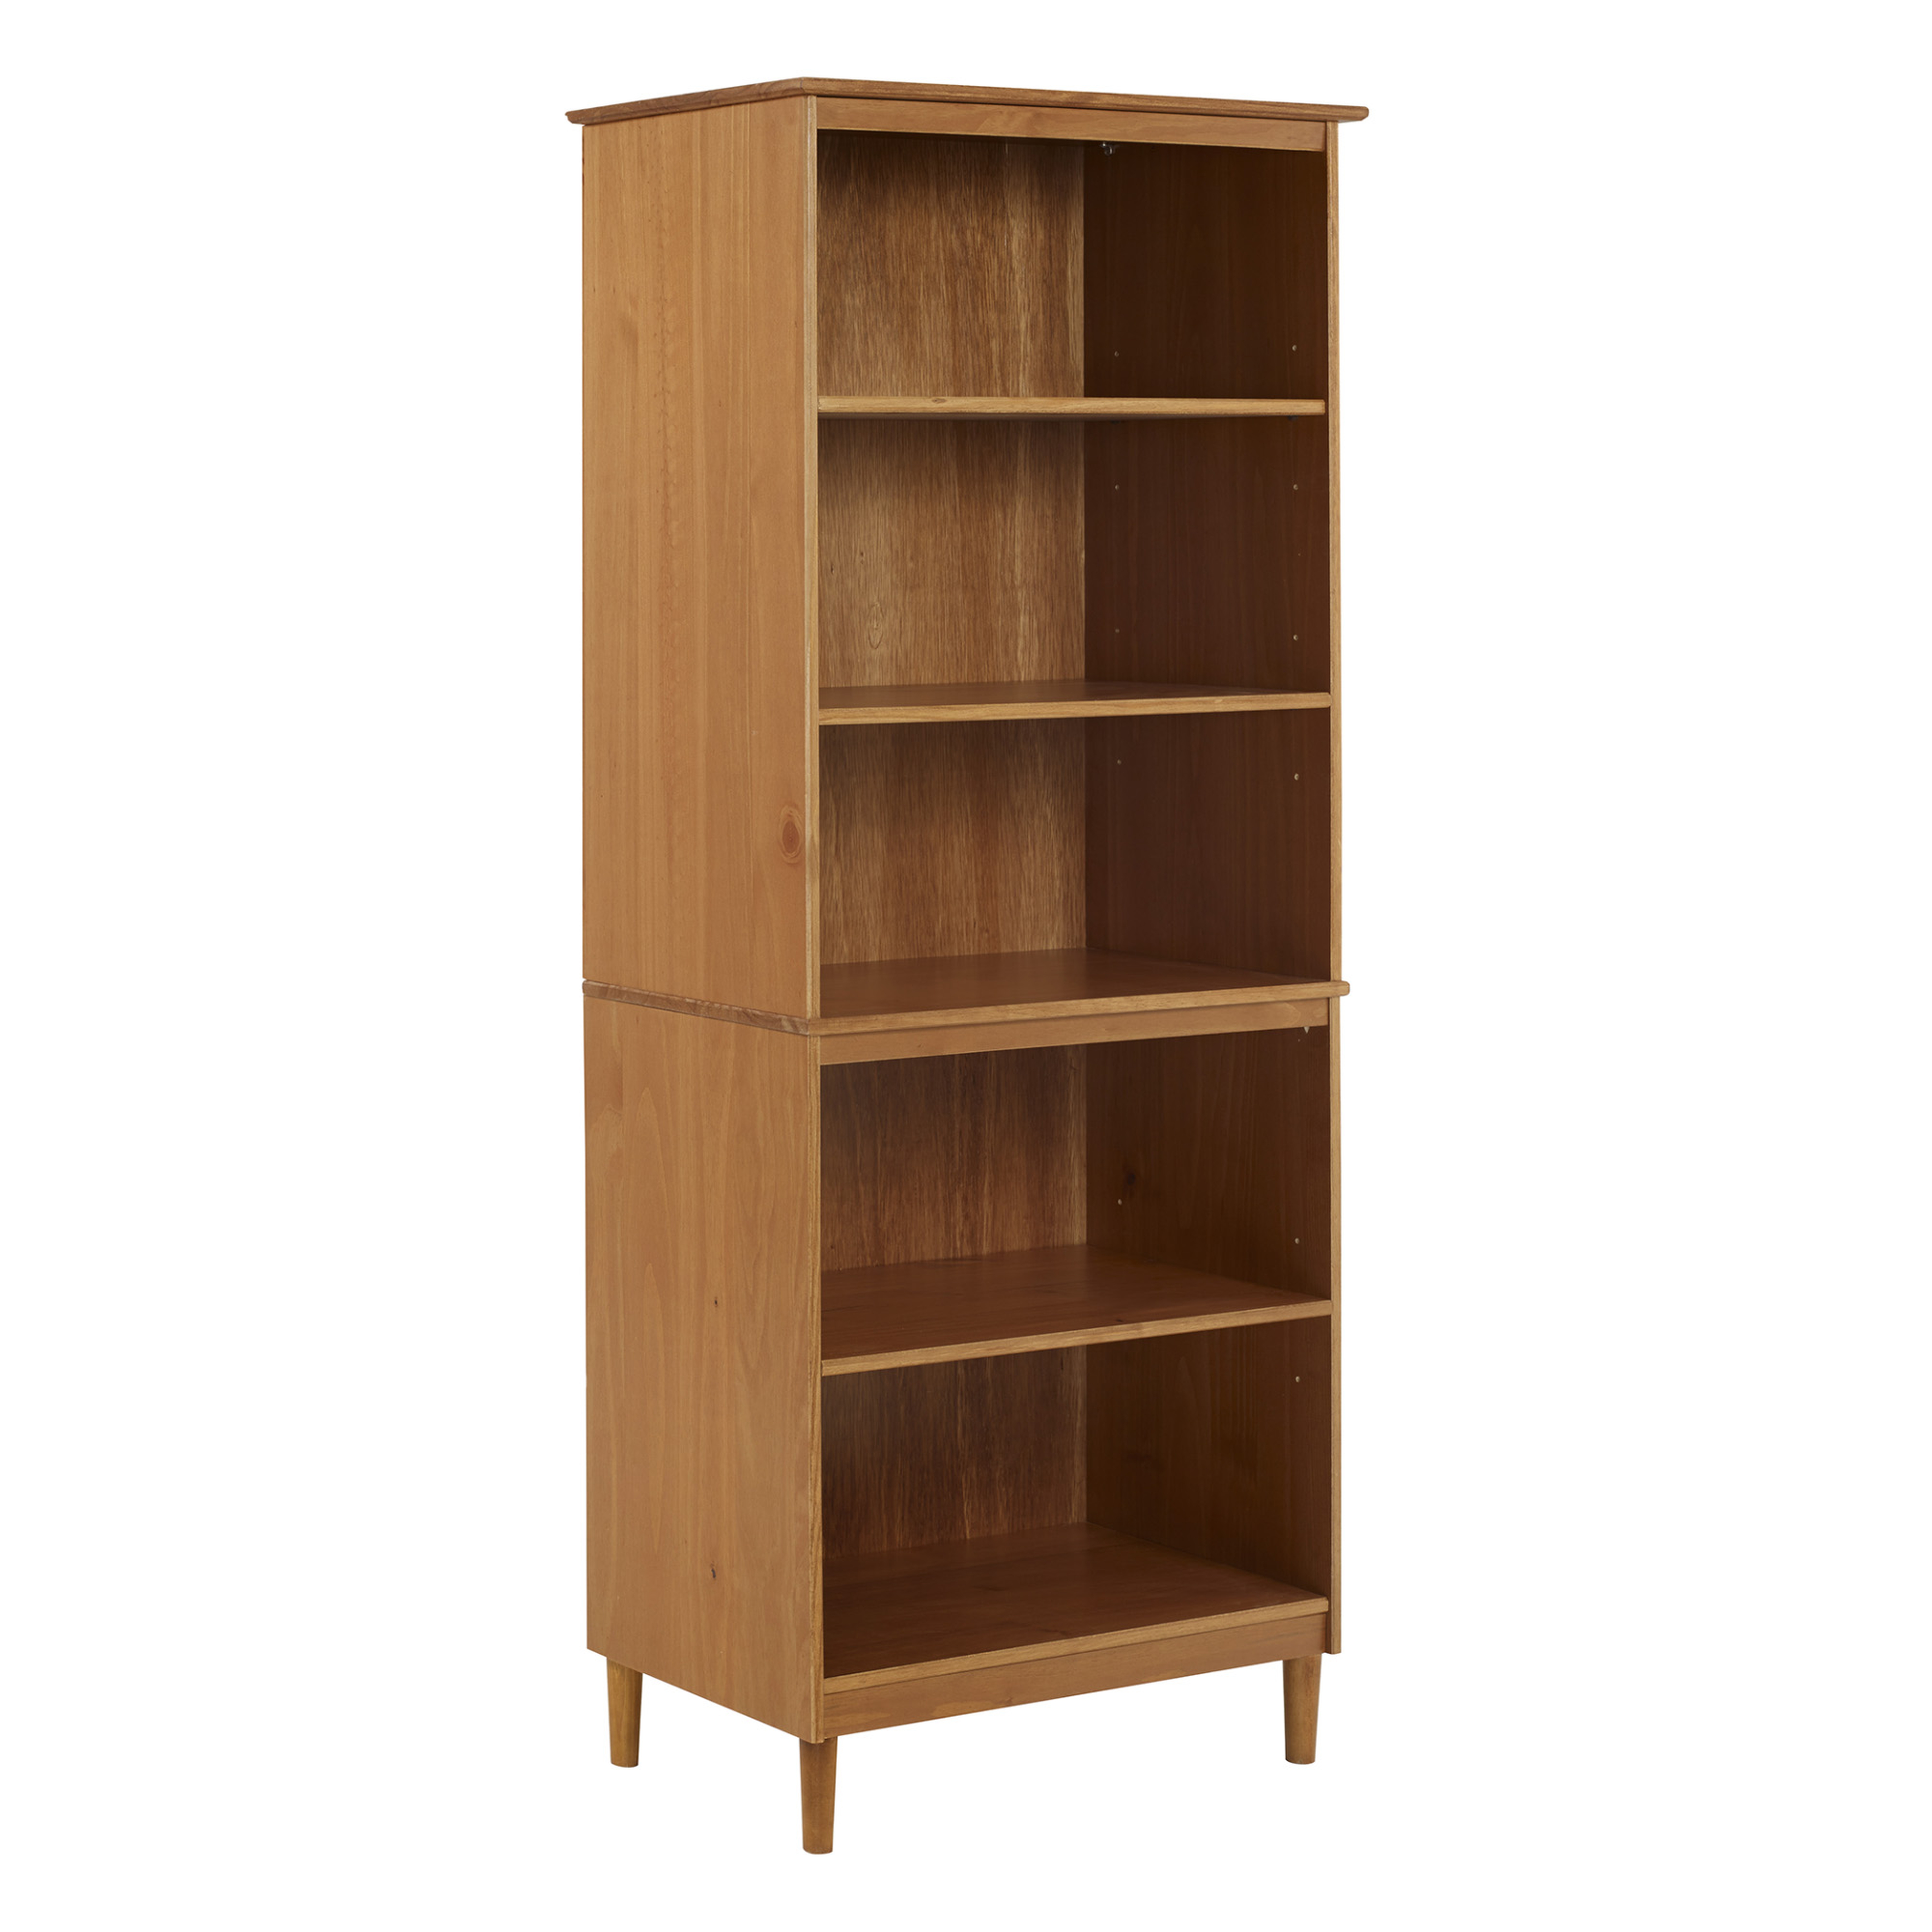 Spencer Wood Bookcase, Caramel - Contour & Co.